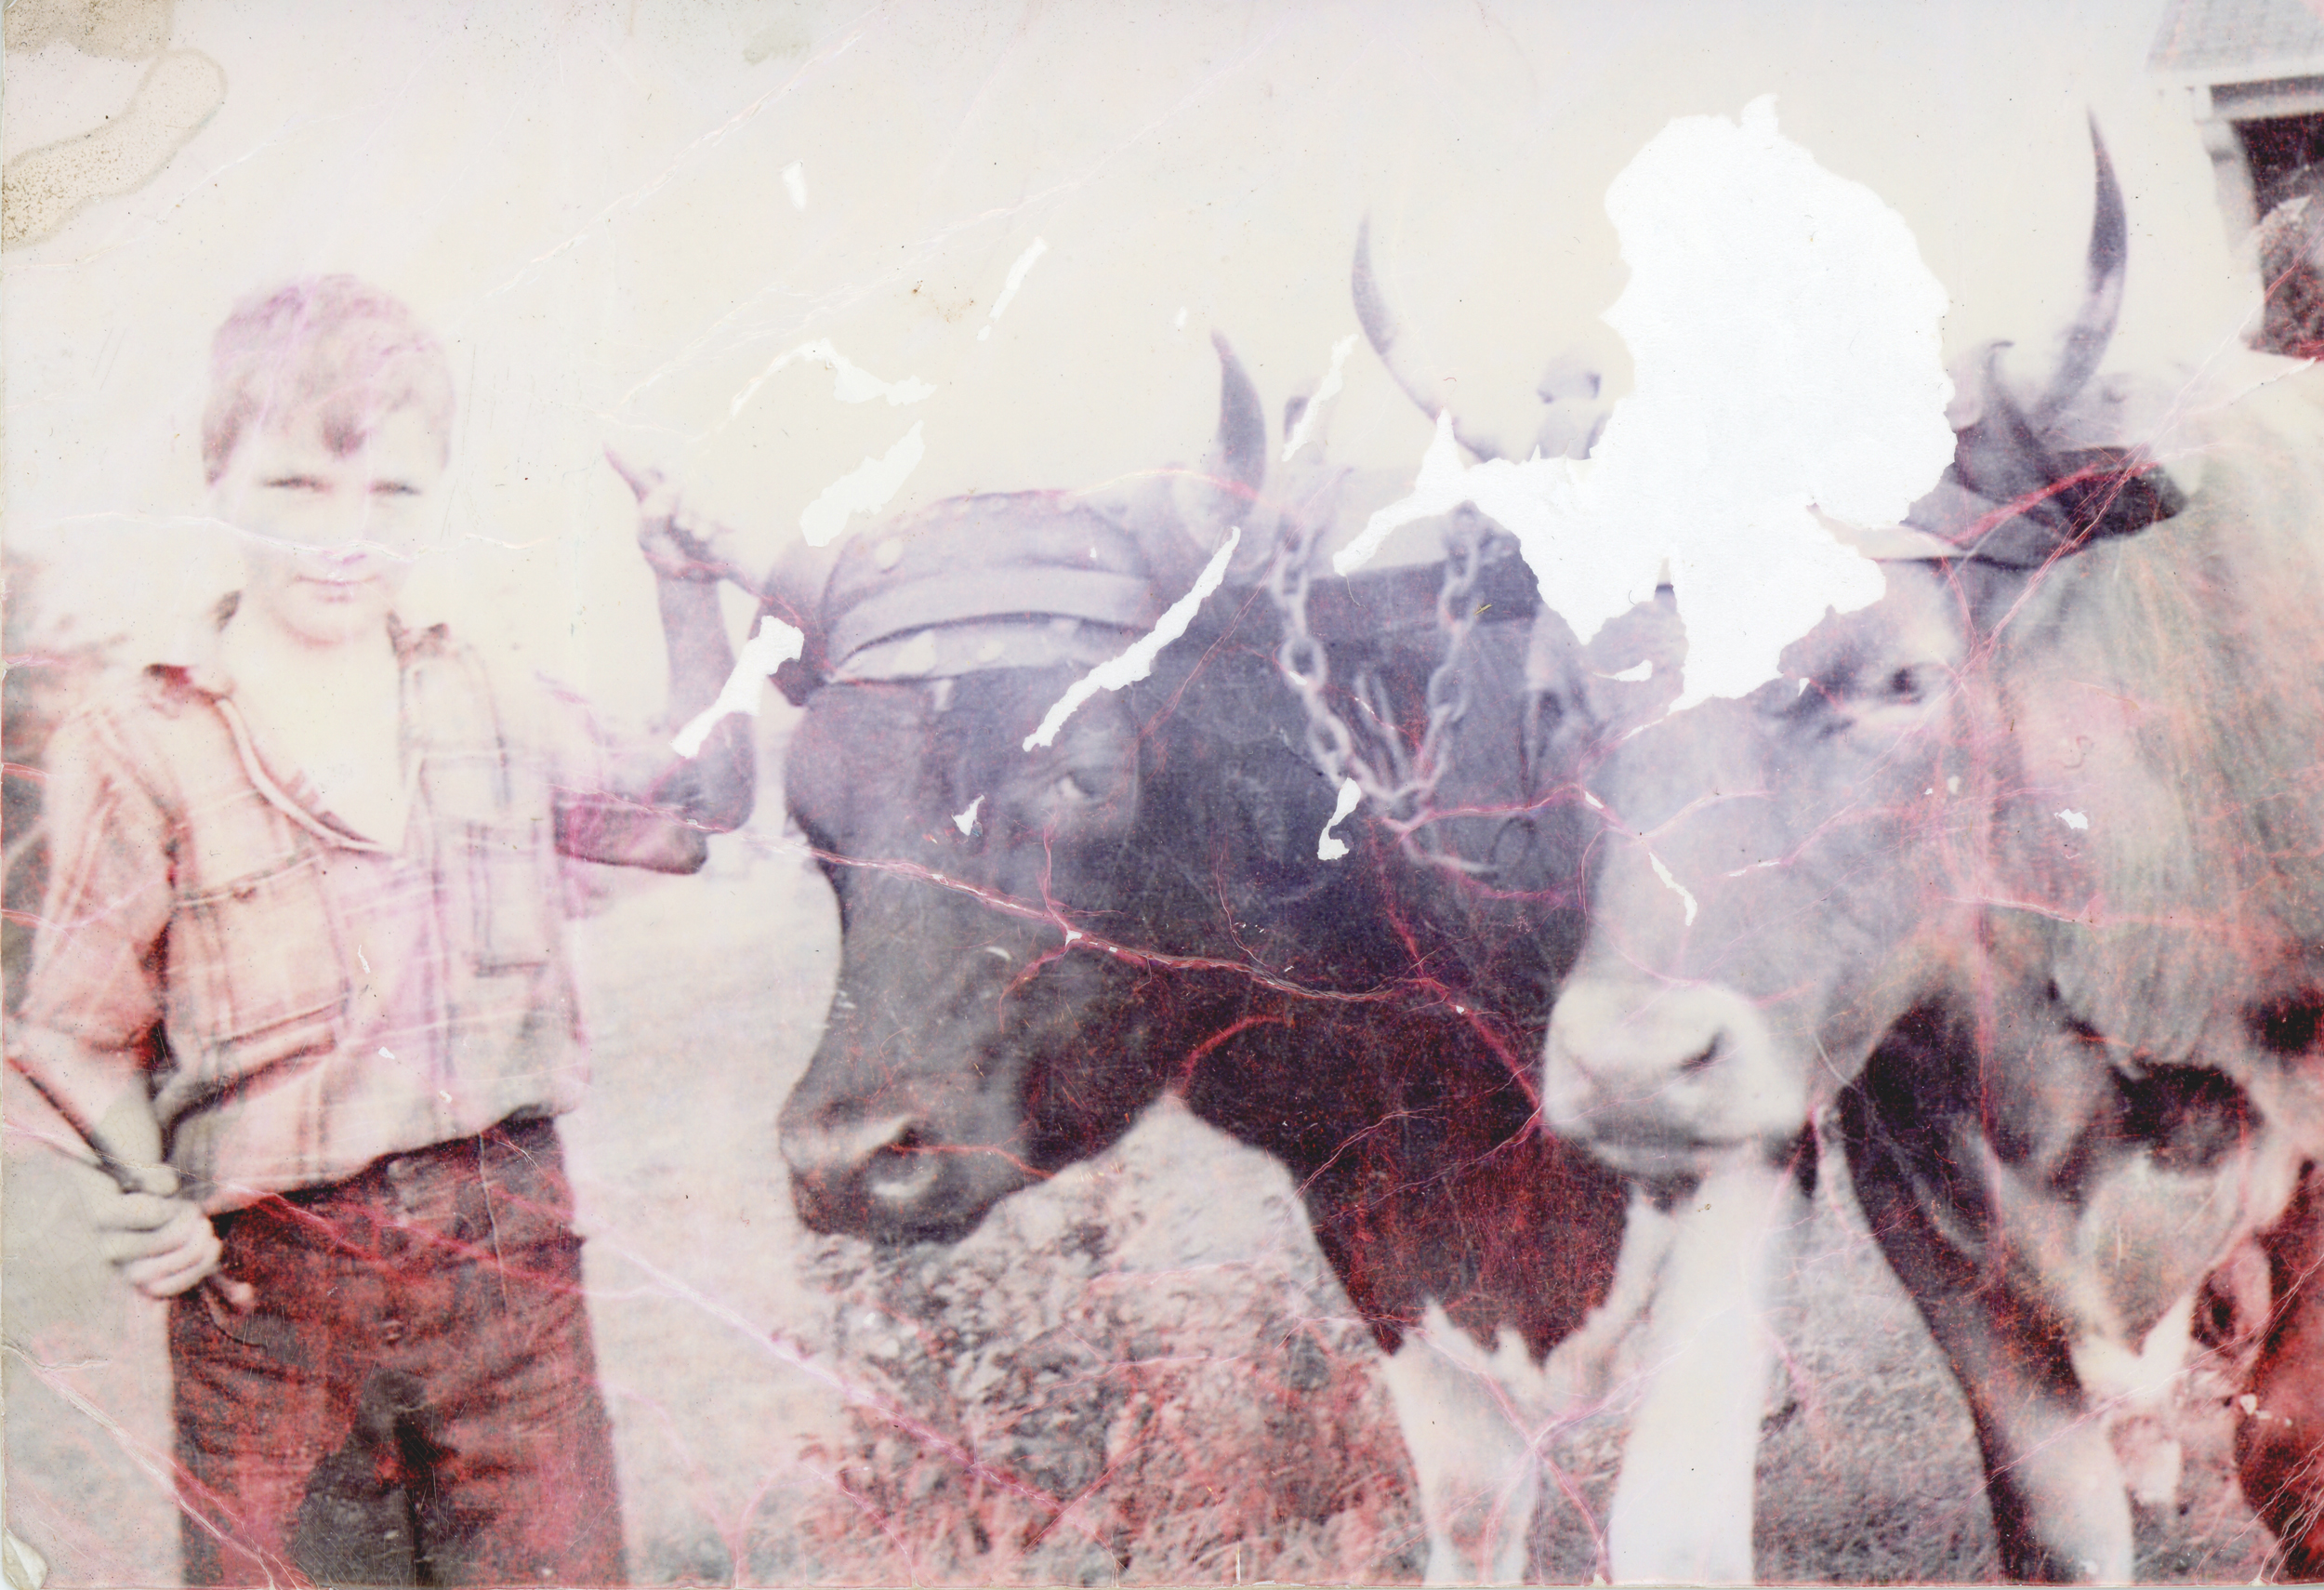 Boy and cows original FOR WEB.jpg